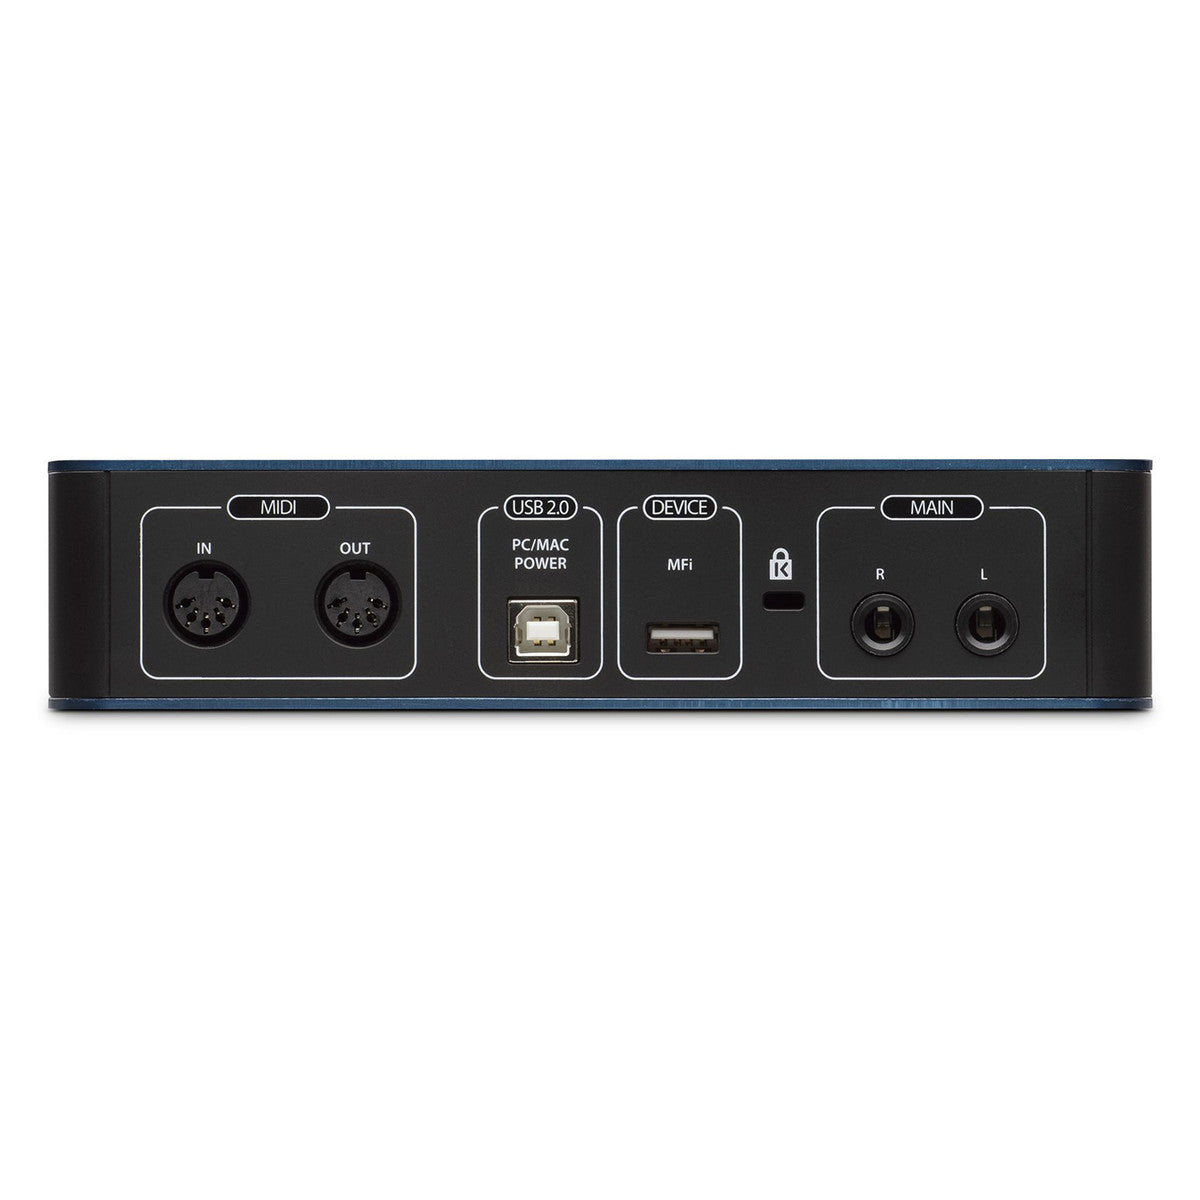 PreSonus Audiobox iTwo Audio Interface - iPad/USB Audio Interface